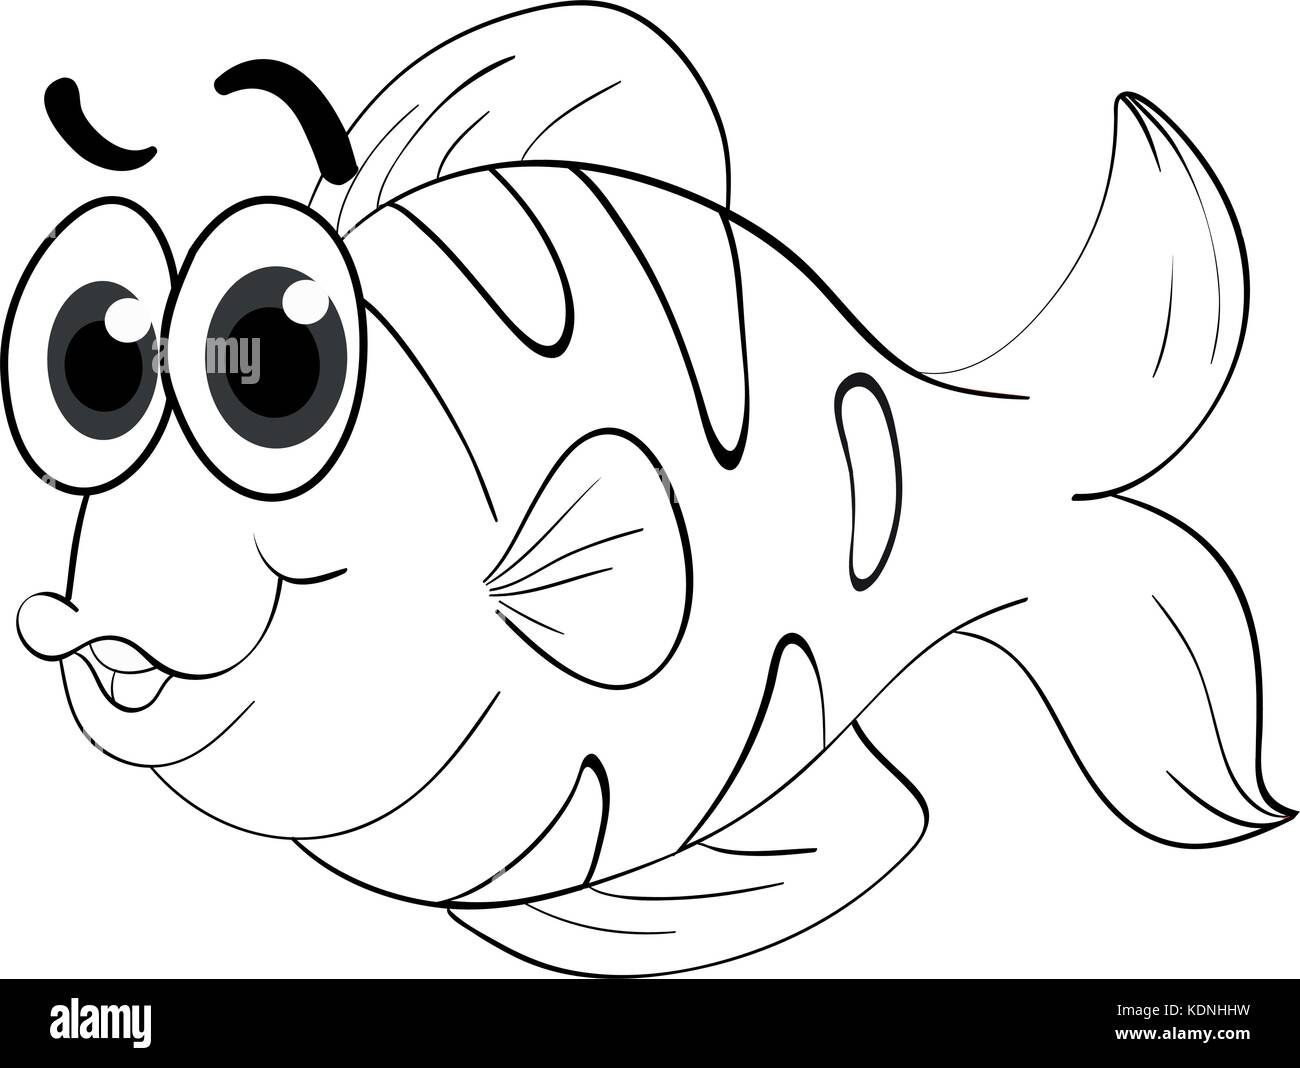 Animal outline for cute fish illustration Stock Vector Image & Art